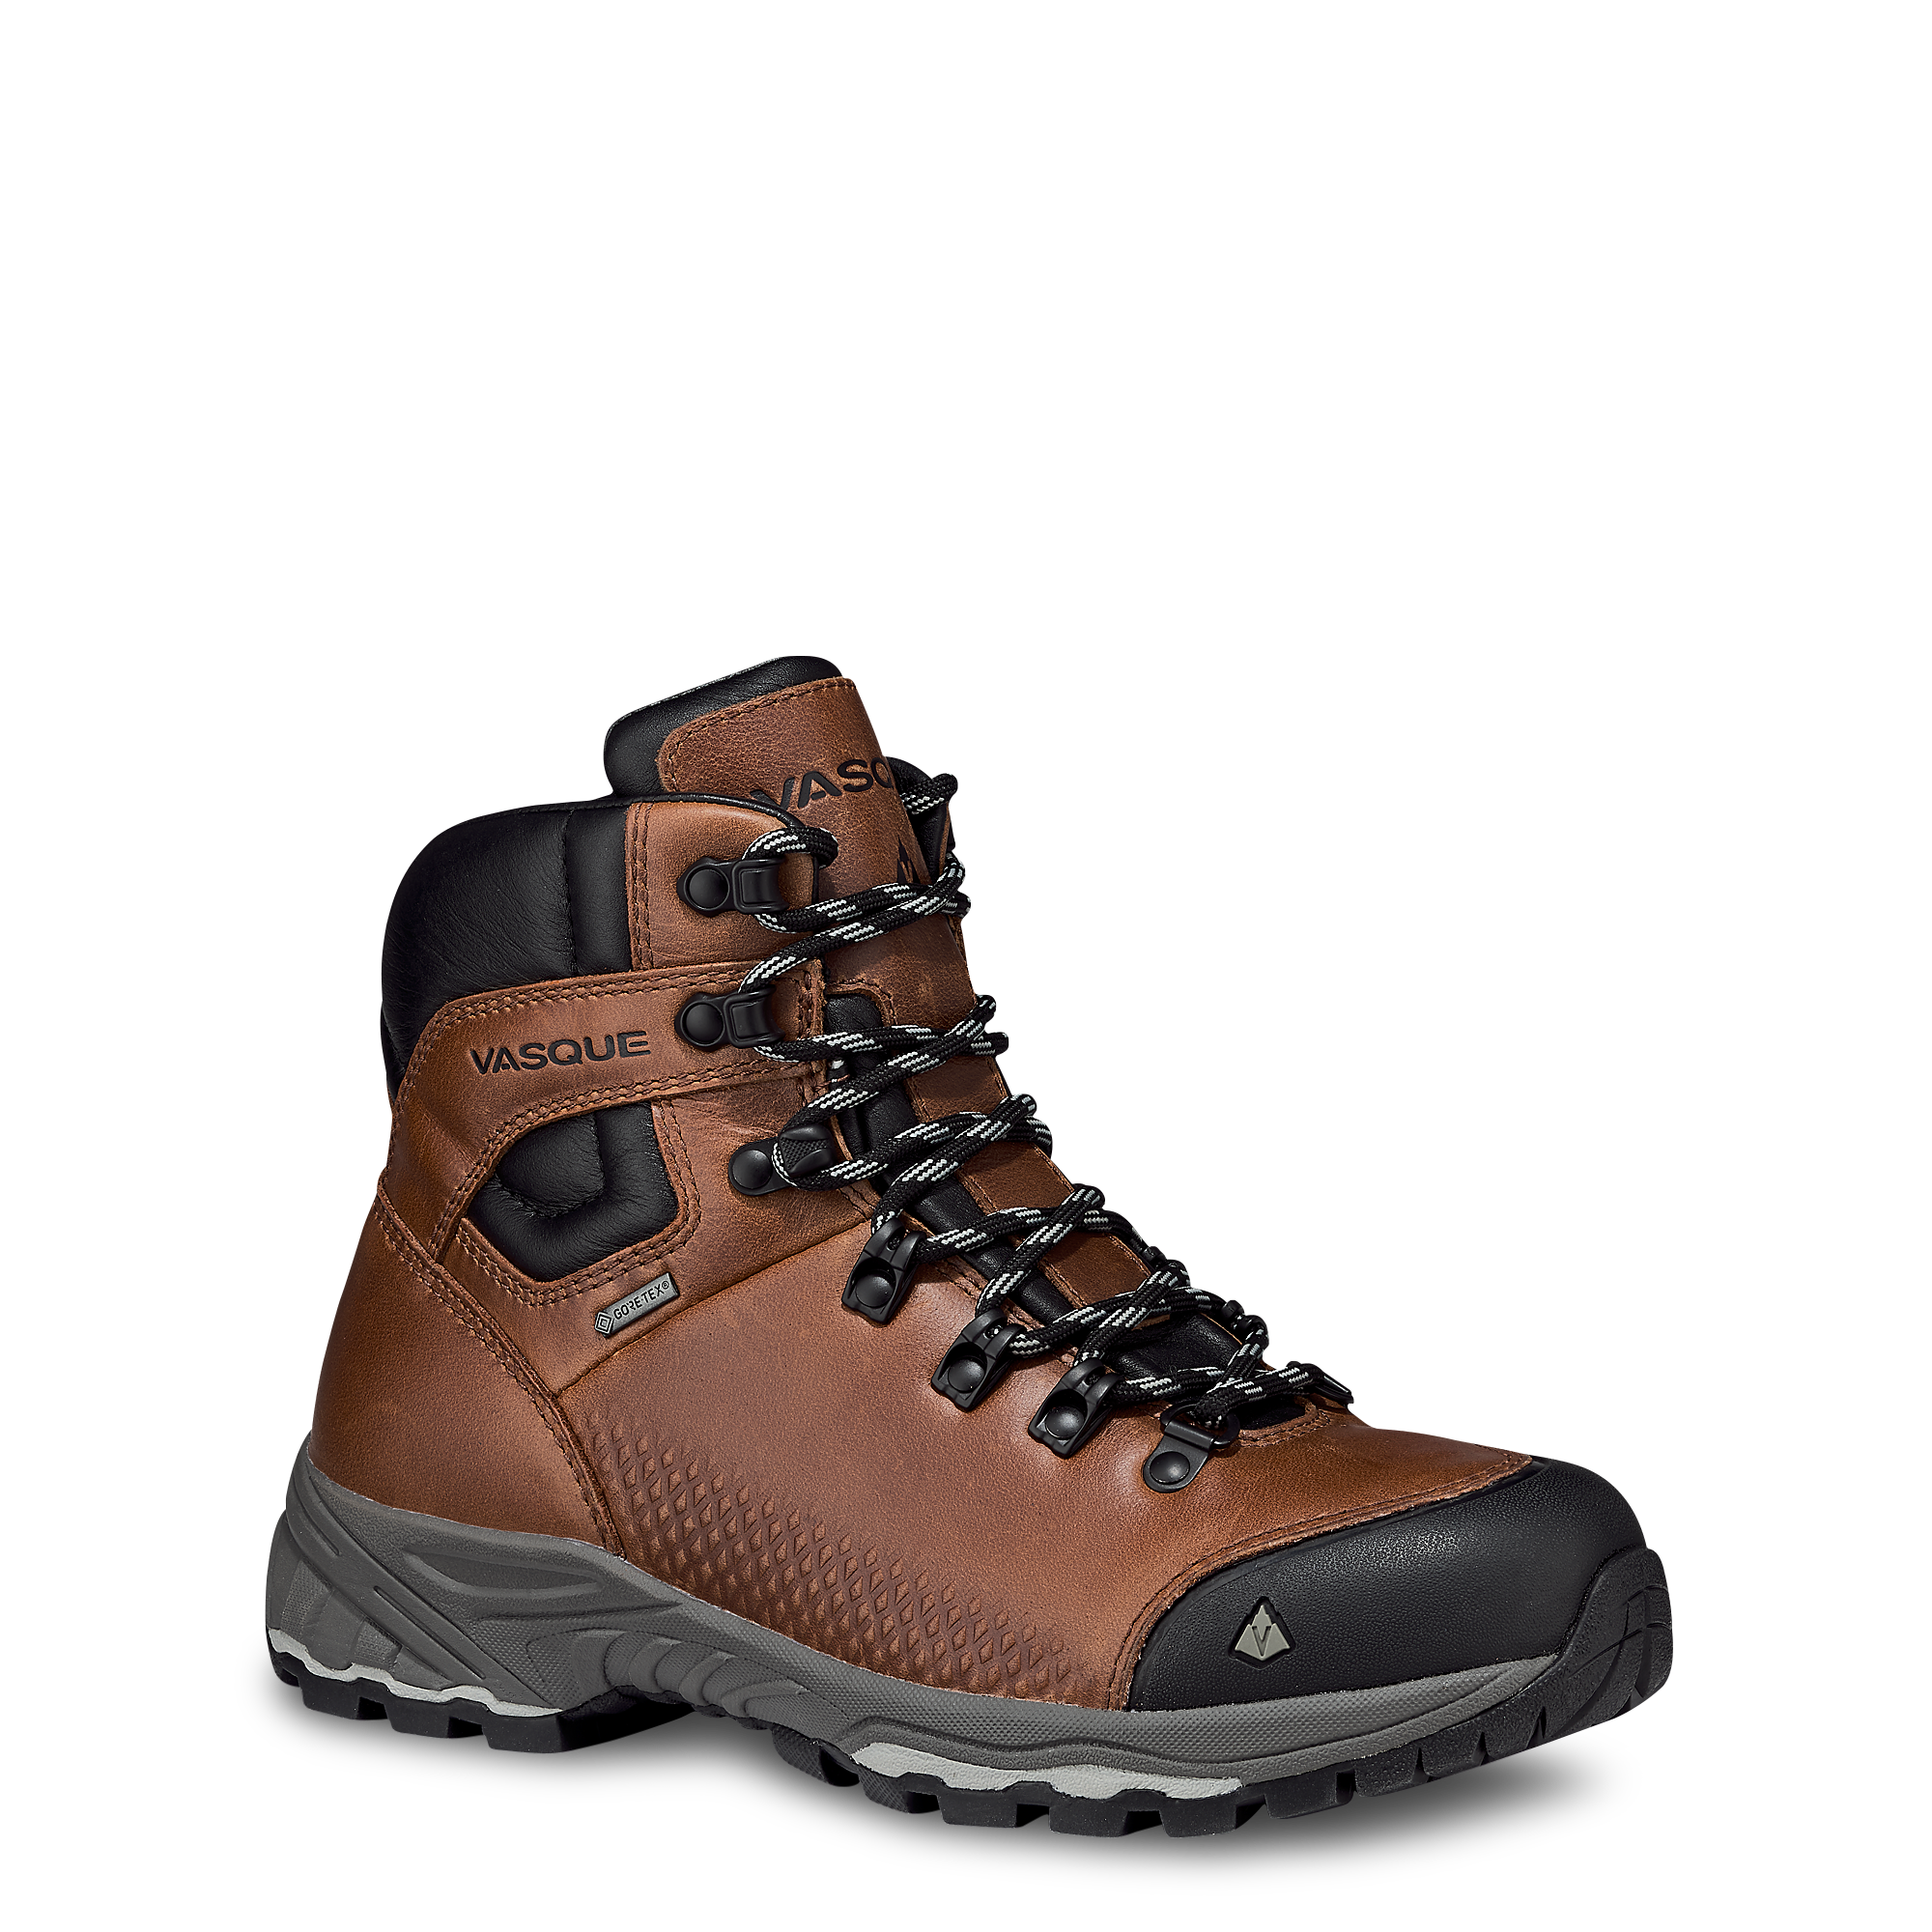 Vasque St. Elias FG GTX Waterproof Hiking Boots for Ladies - Cognac - 9M